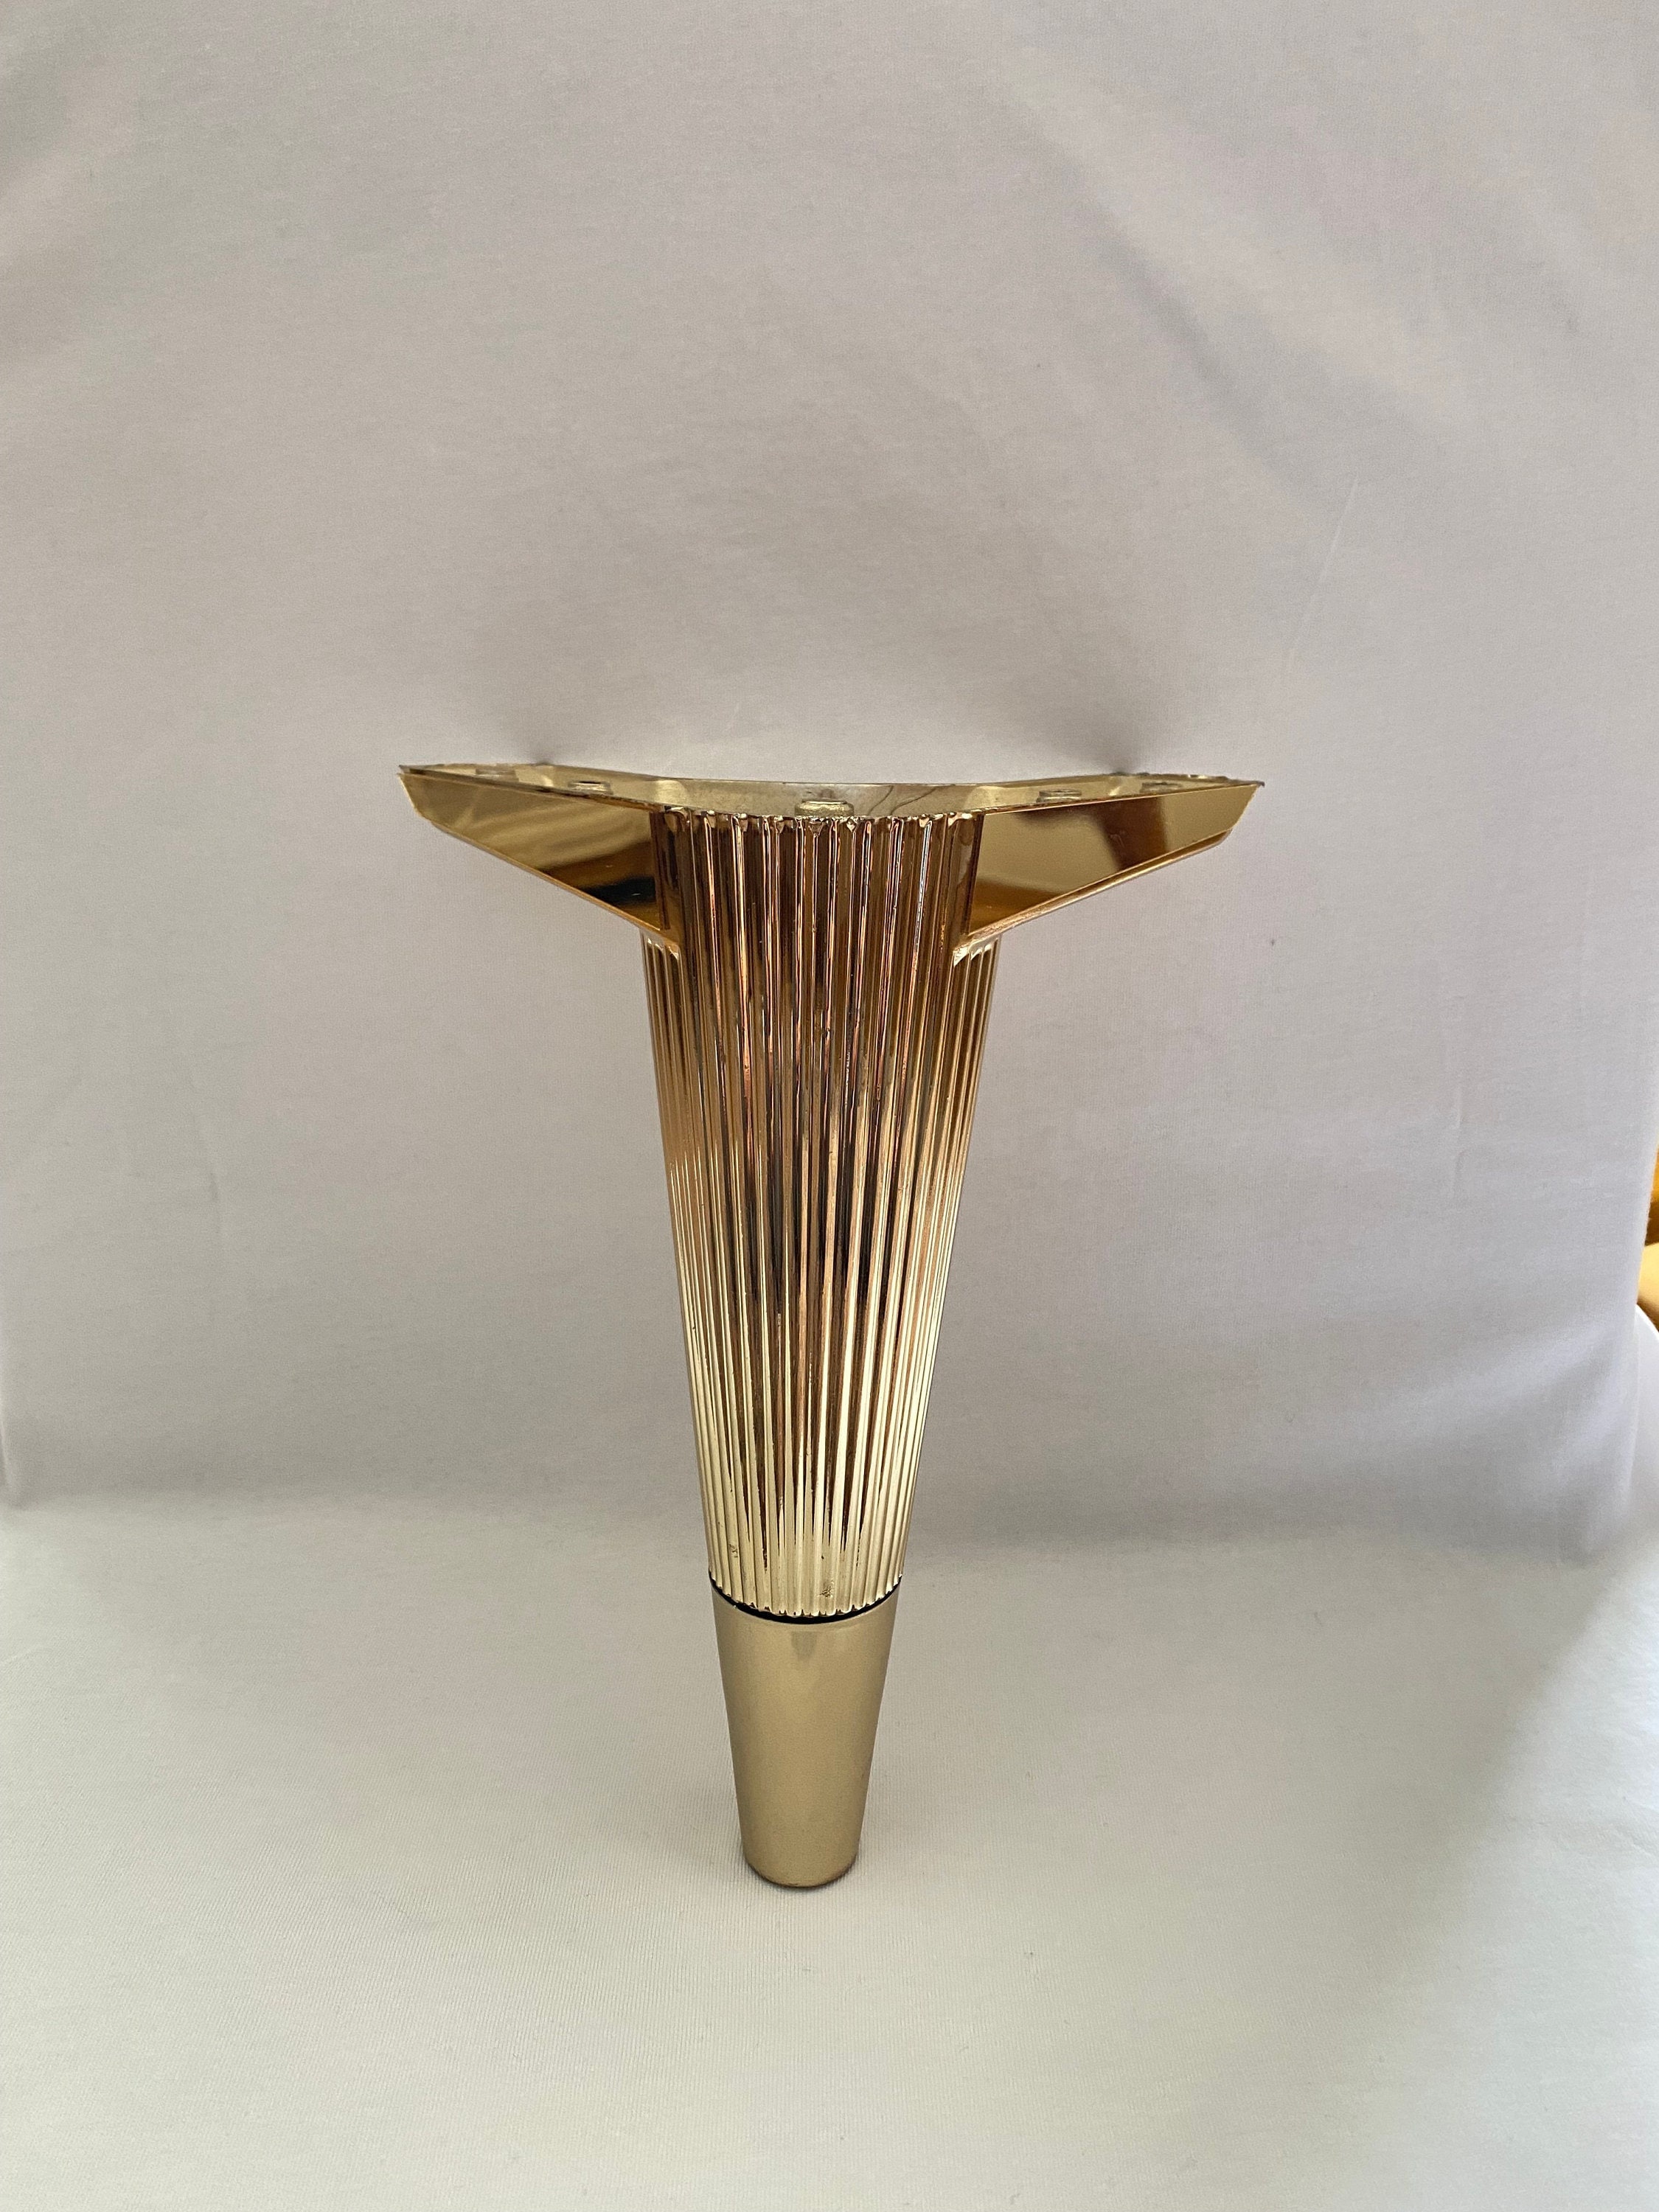 Men's Silver and Gold Cuff Bracelet - Got Legs Furniture & Décor